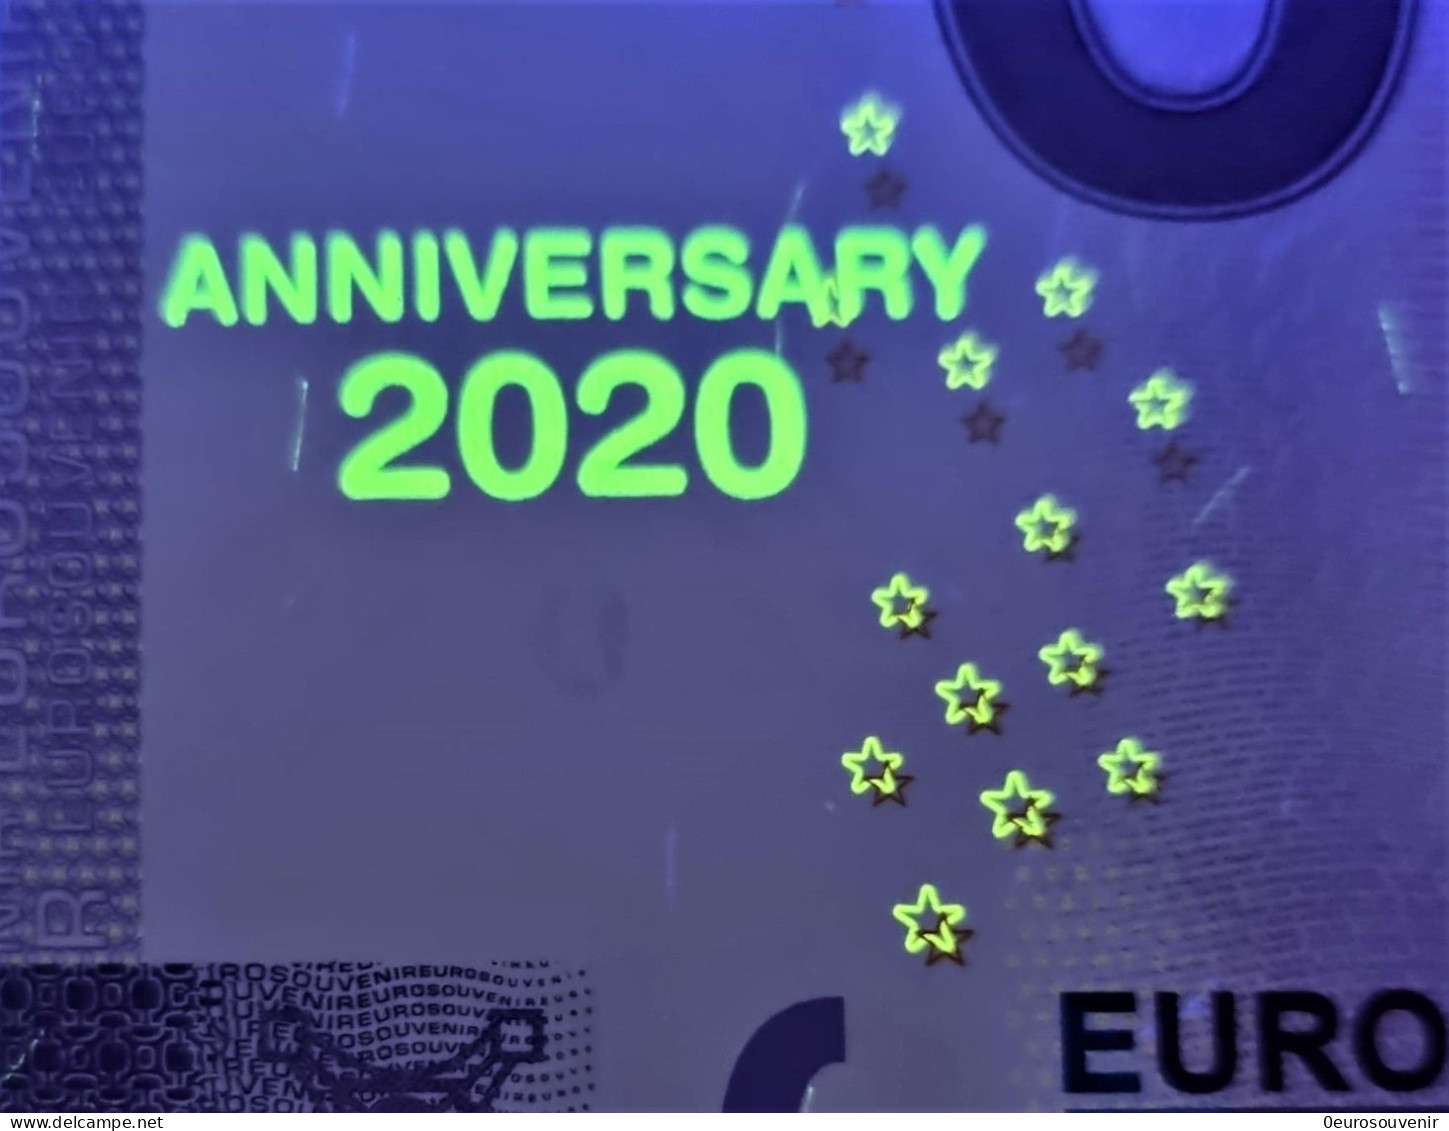 0-Euro ZEJG / XEJG 2020-13 Fehldruck SCHLOSS BURG - ANGRIFF DER SCHWEDEN Set NORMAL+ANNIVERSARY - Privéproeven